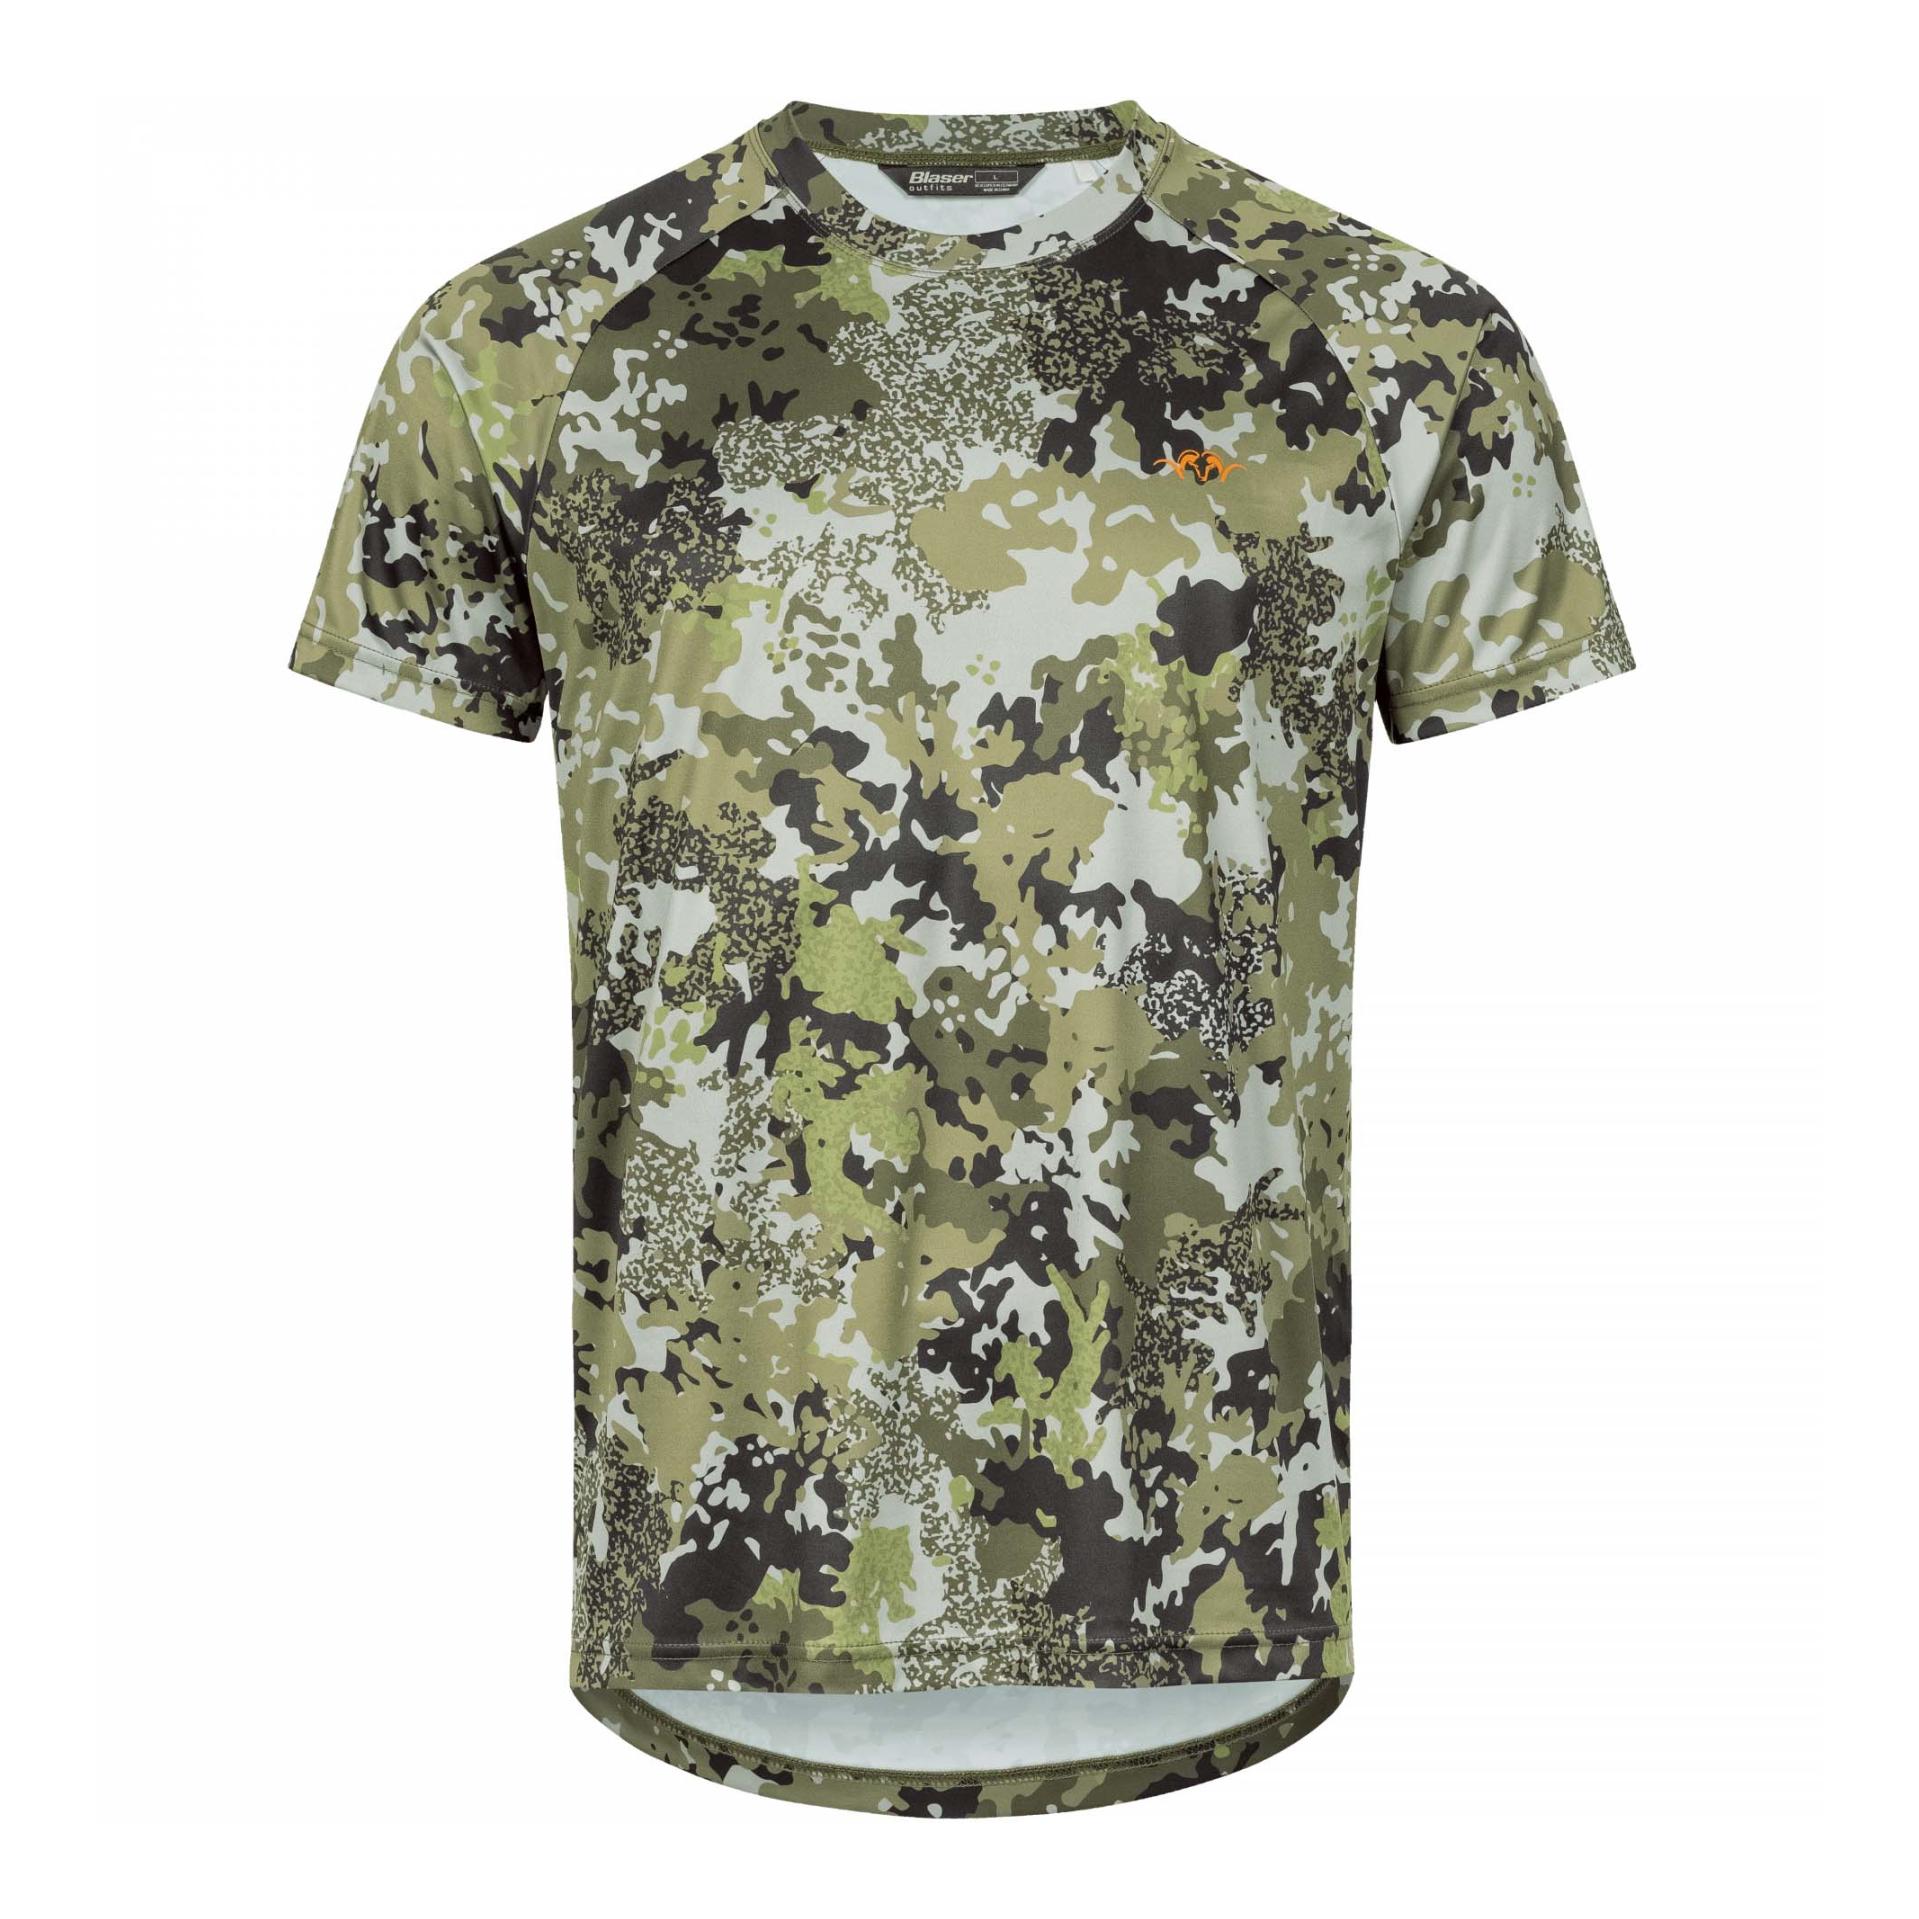 Image of Blaser 20 Funktions T-Shirt - HunTec Camouflage bei Hauptner.ch